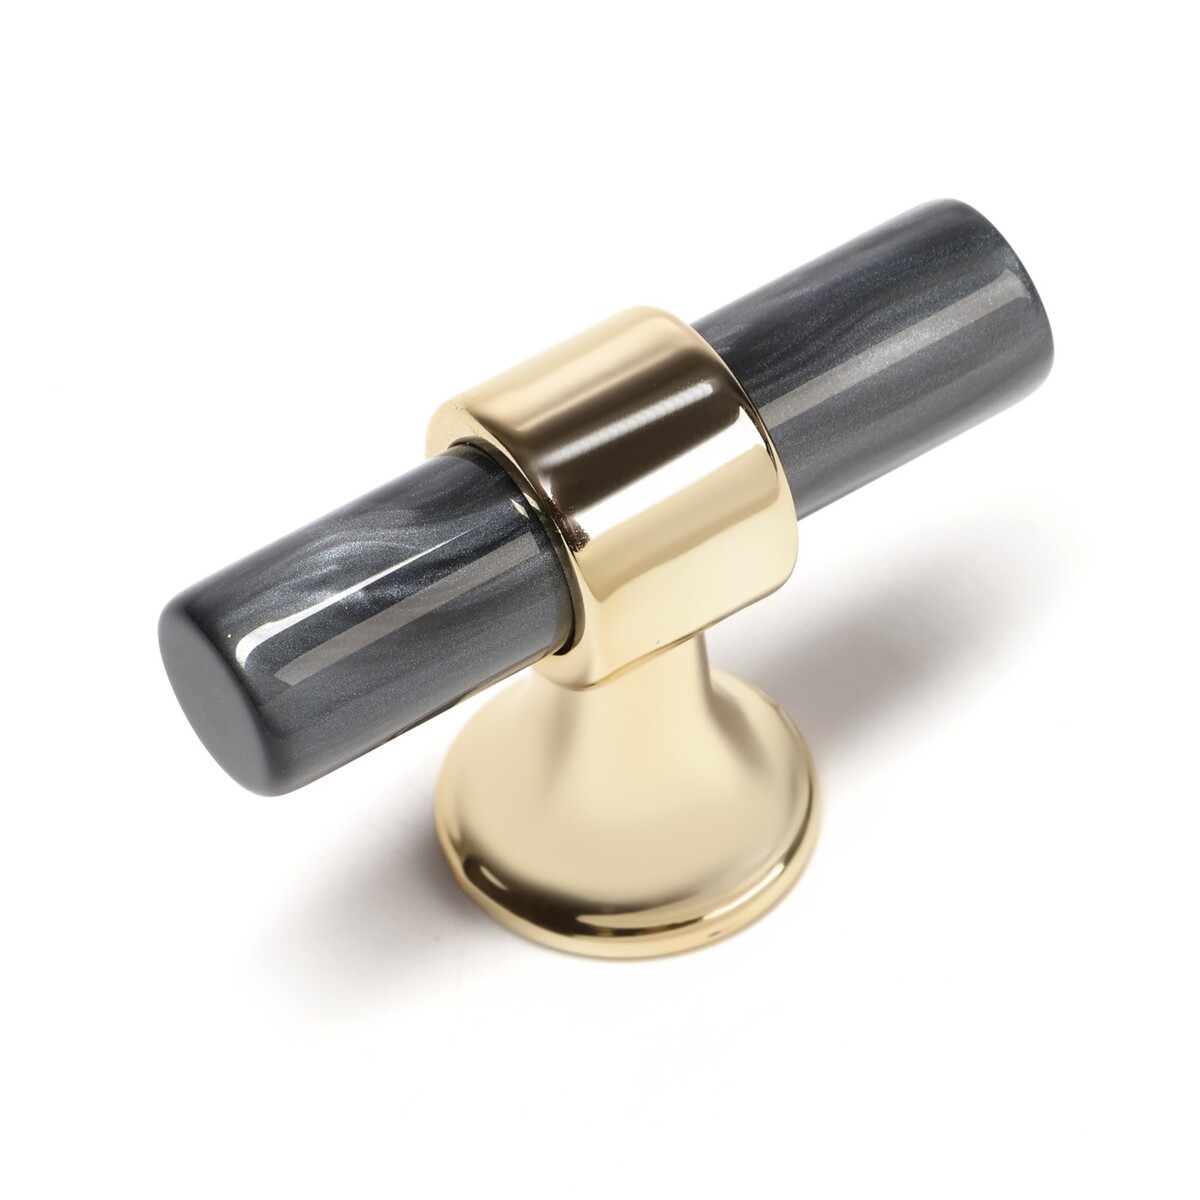 Ручка кнопка cappio pk106, d=12 мм, пластик, цвет графит/золото ручка кнопка cappio d 25 мм h 20 мм латунь золото